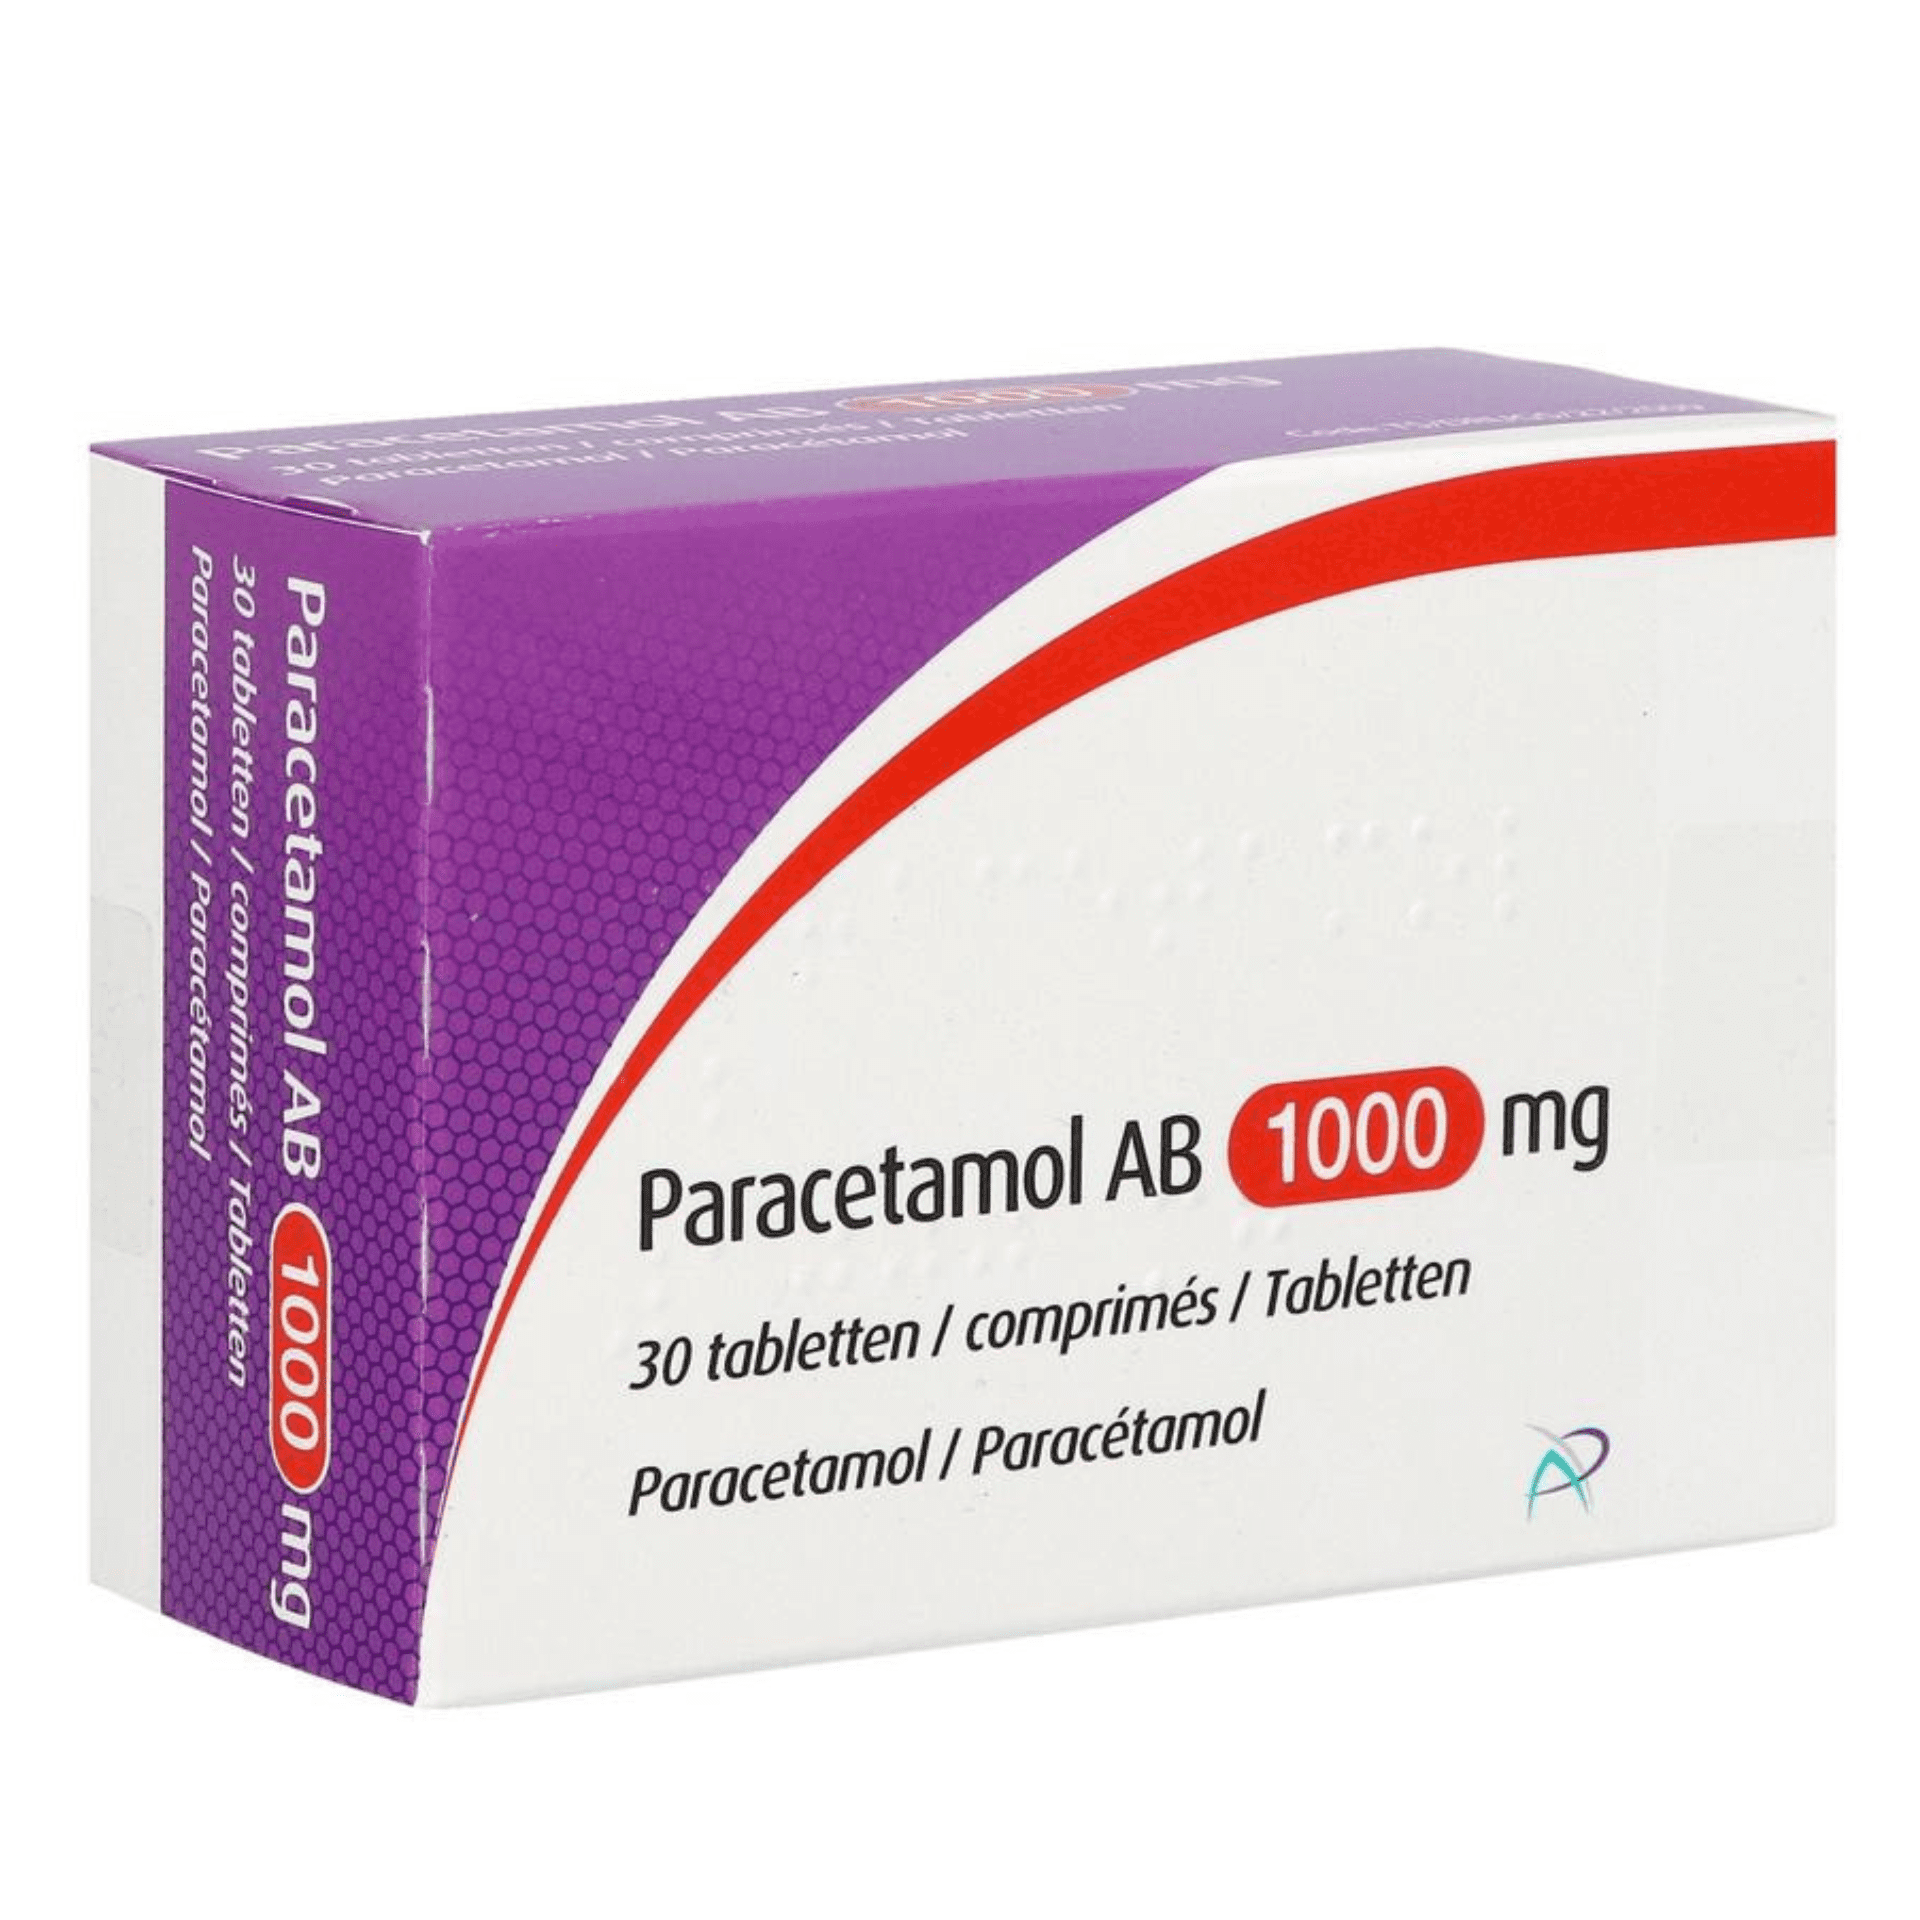 Paracetamol AB 1000 mg 